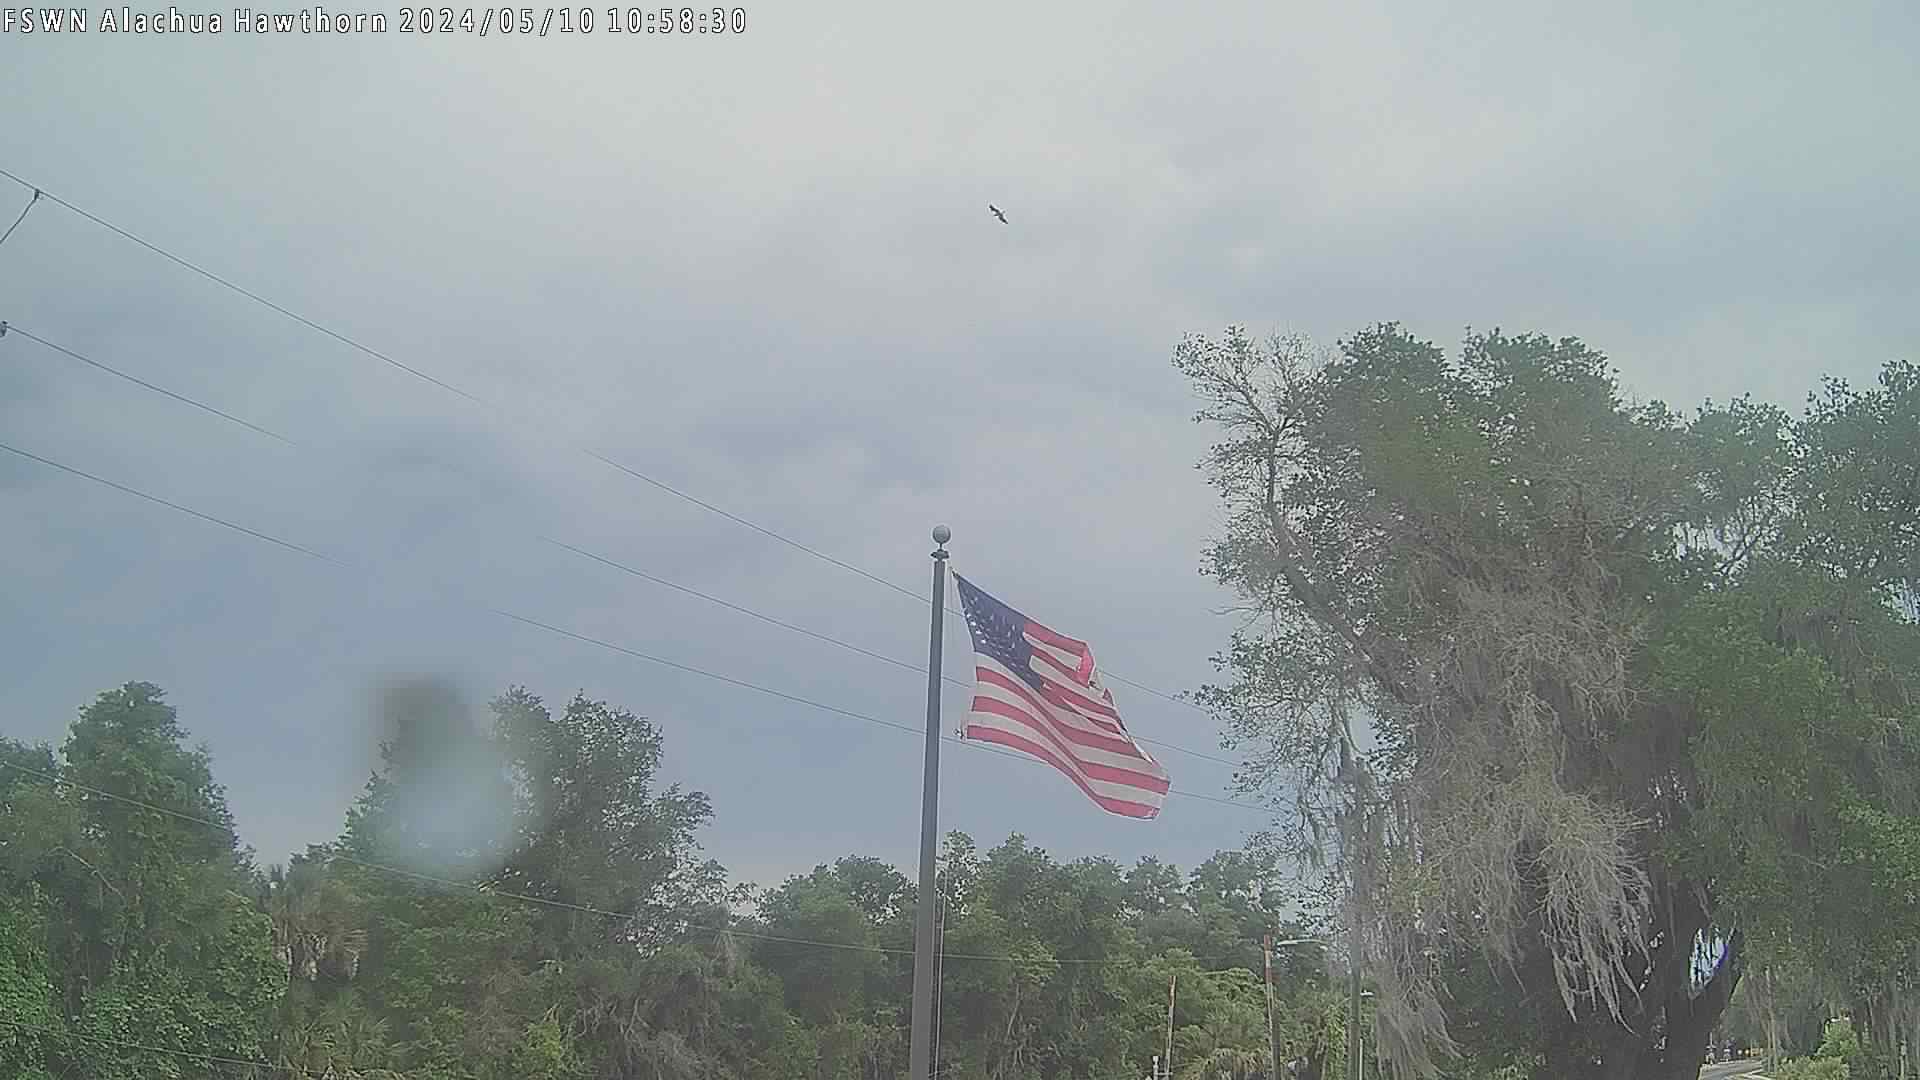  WeatherSTEM Cloud Camera FSWNHawthorne in Alachua County, Florida FL at FSWN Alachua Hawthorne